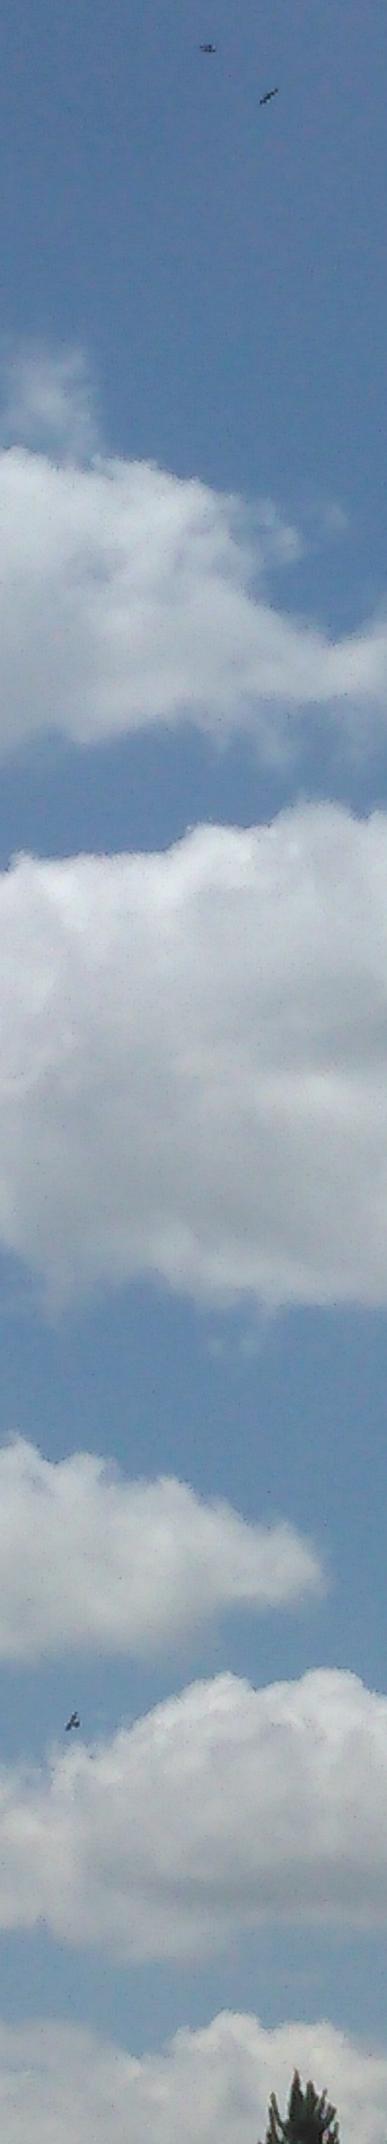 Hawks high, Buzzard low, in Hawks, kites, buzzards, by John S. Quarterman, for OkraParadiseFarms.com, 17 May 2015